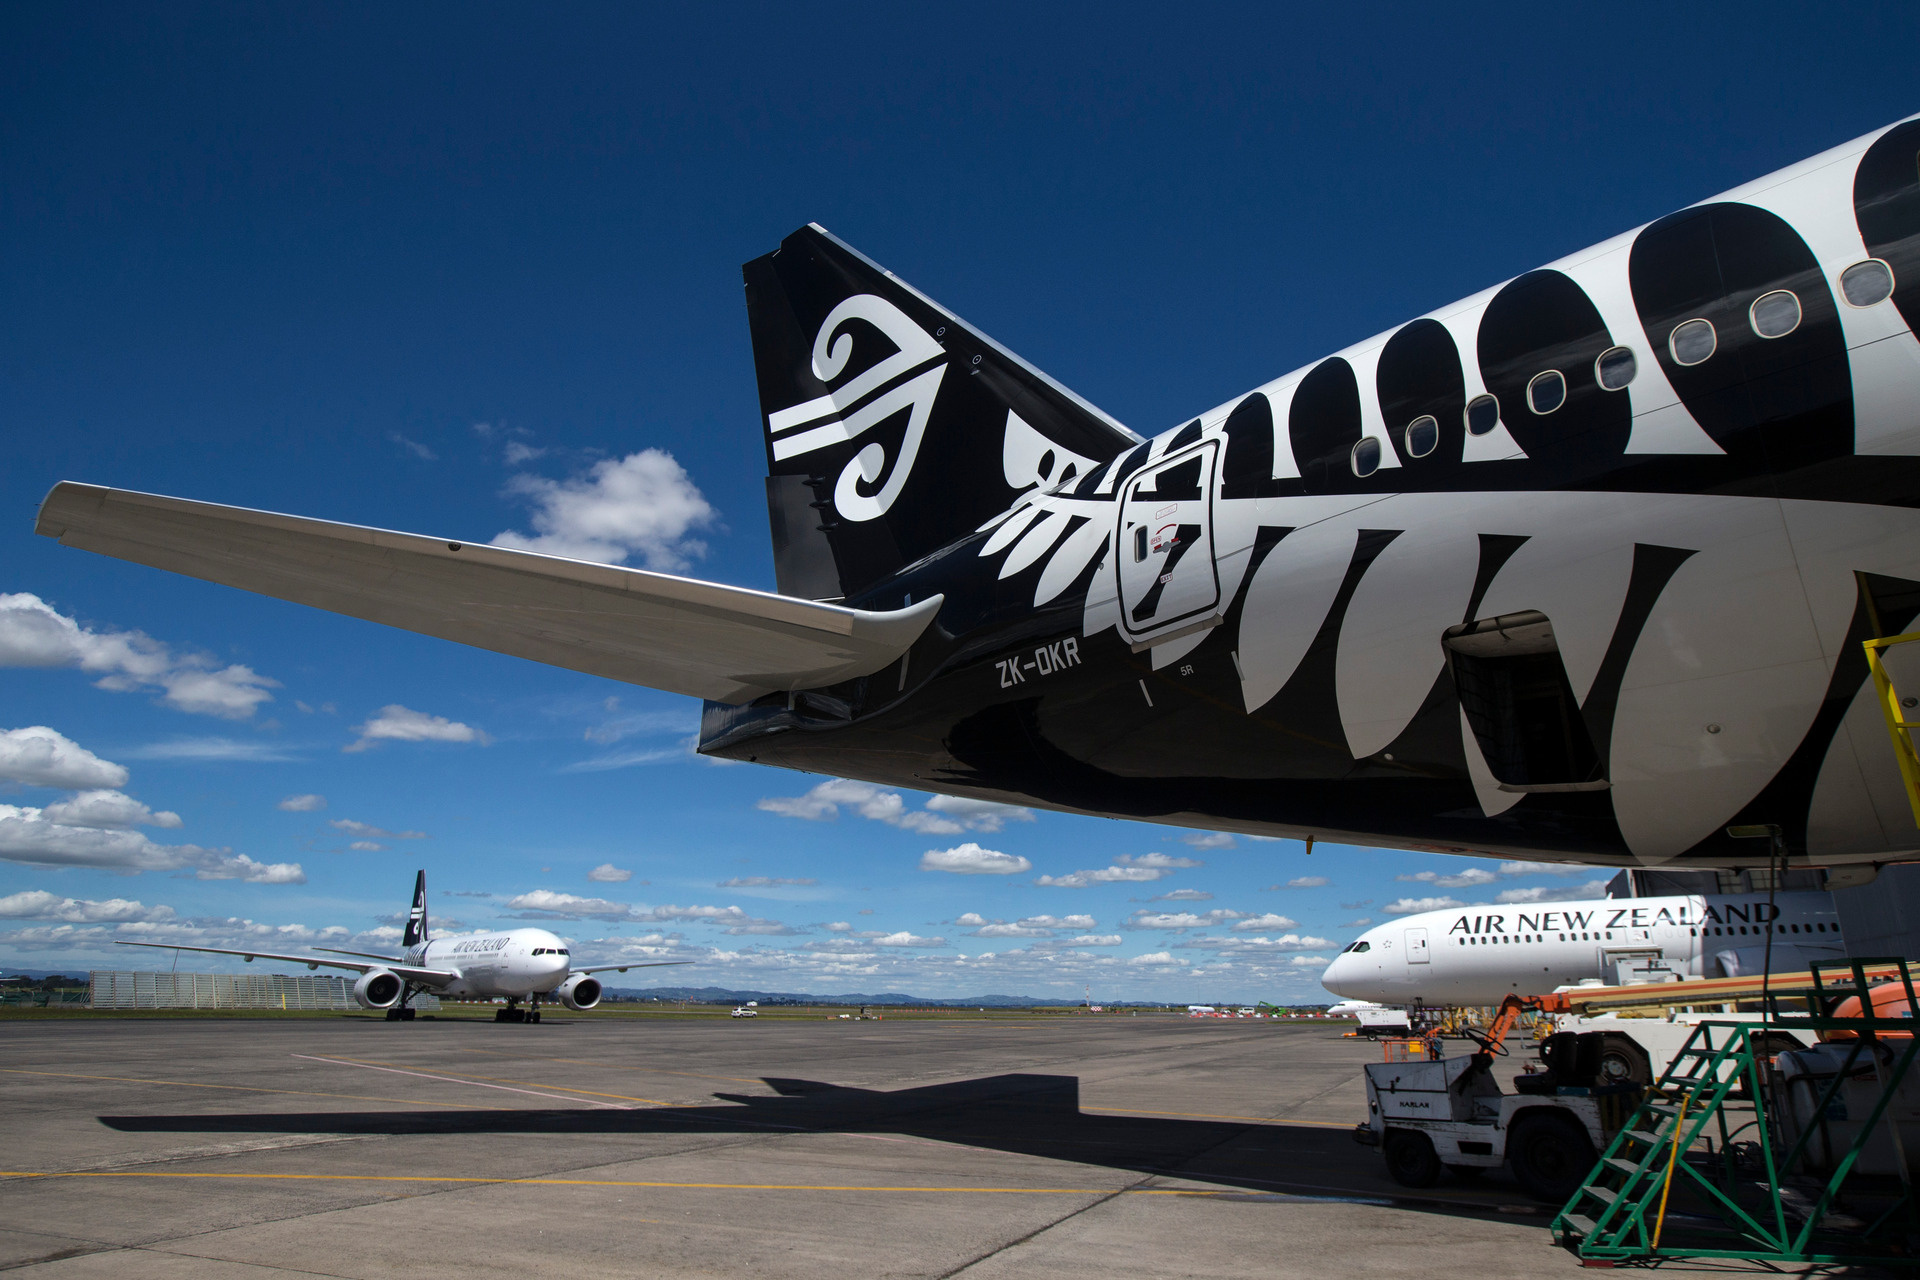 Air new zealand. Air New Zealand флот. Air New Zealand самолеты. Air New Zealand турбовинтовой. Хвост самолета.